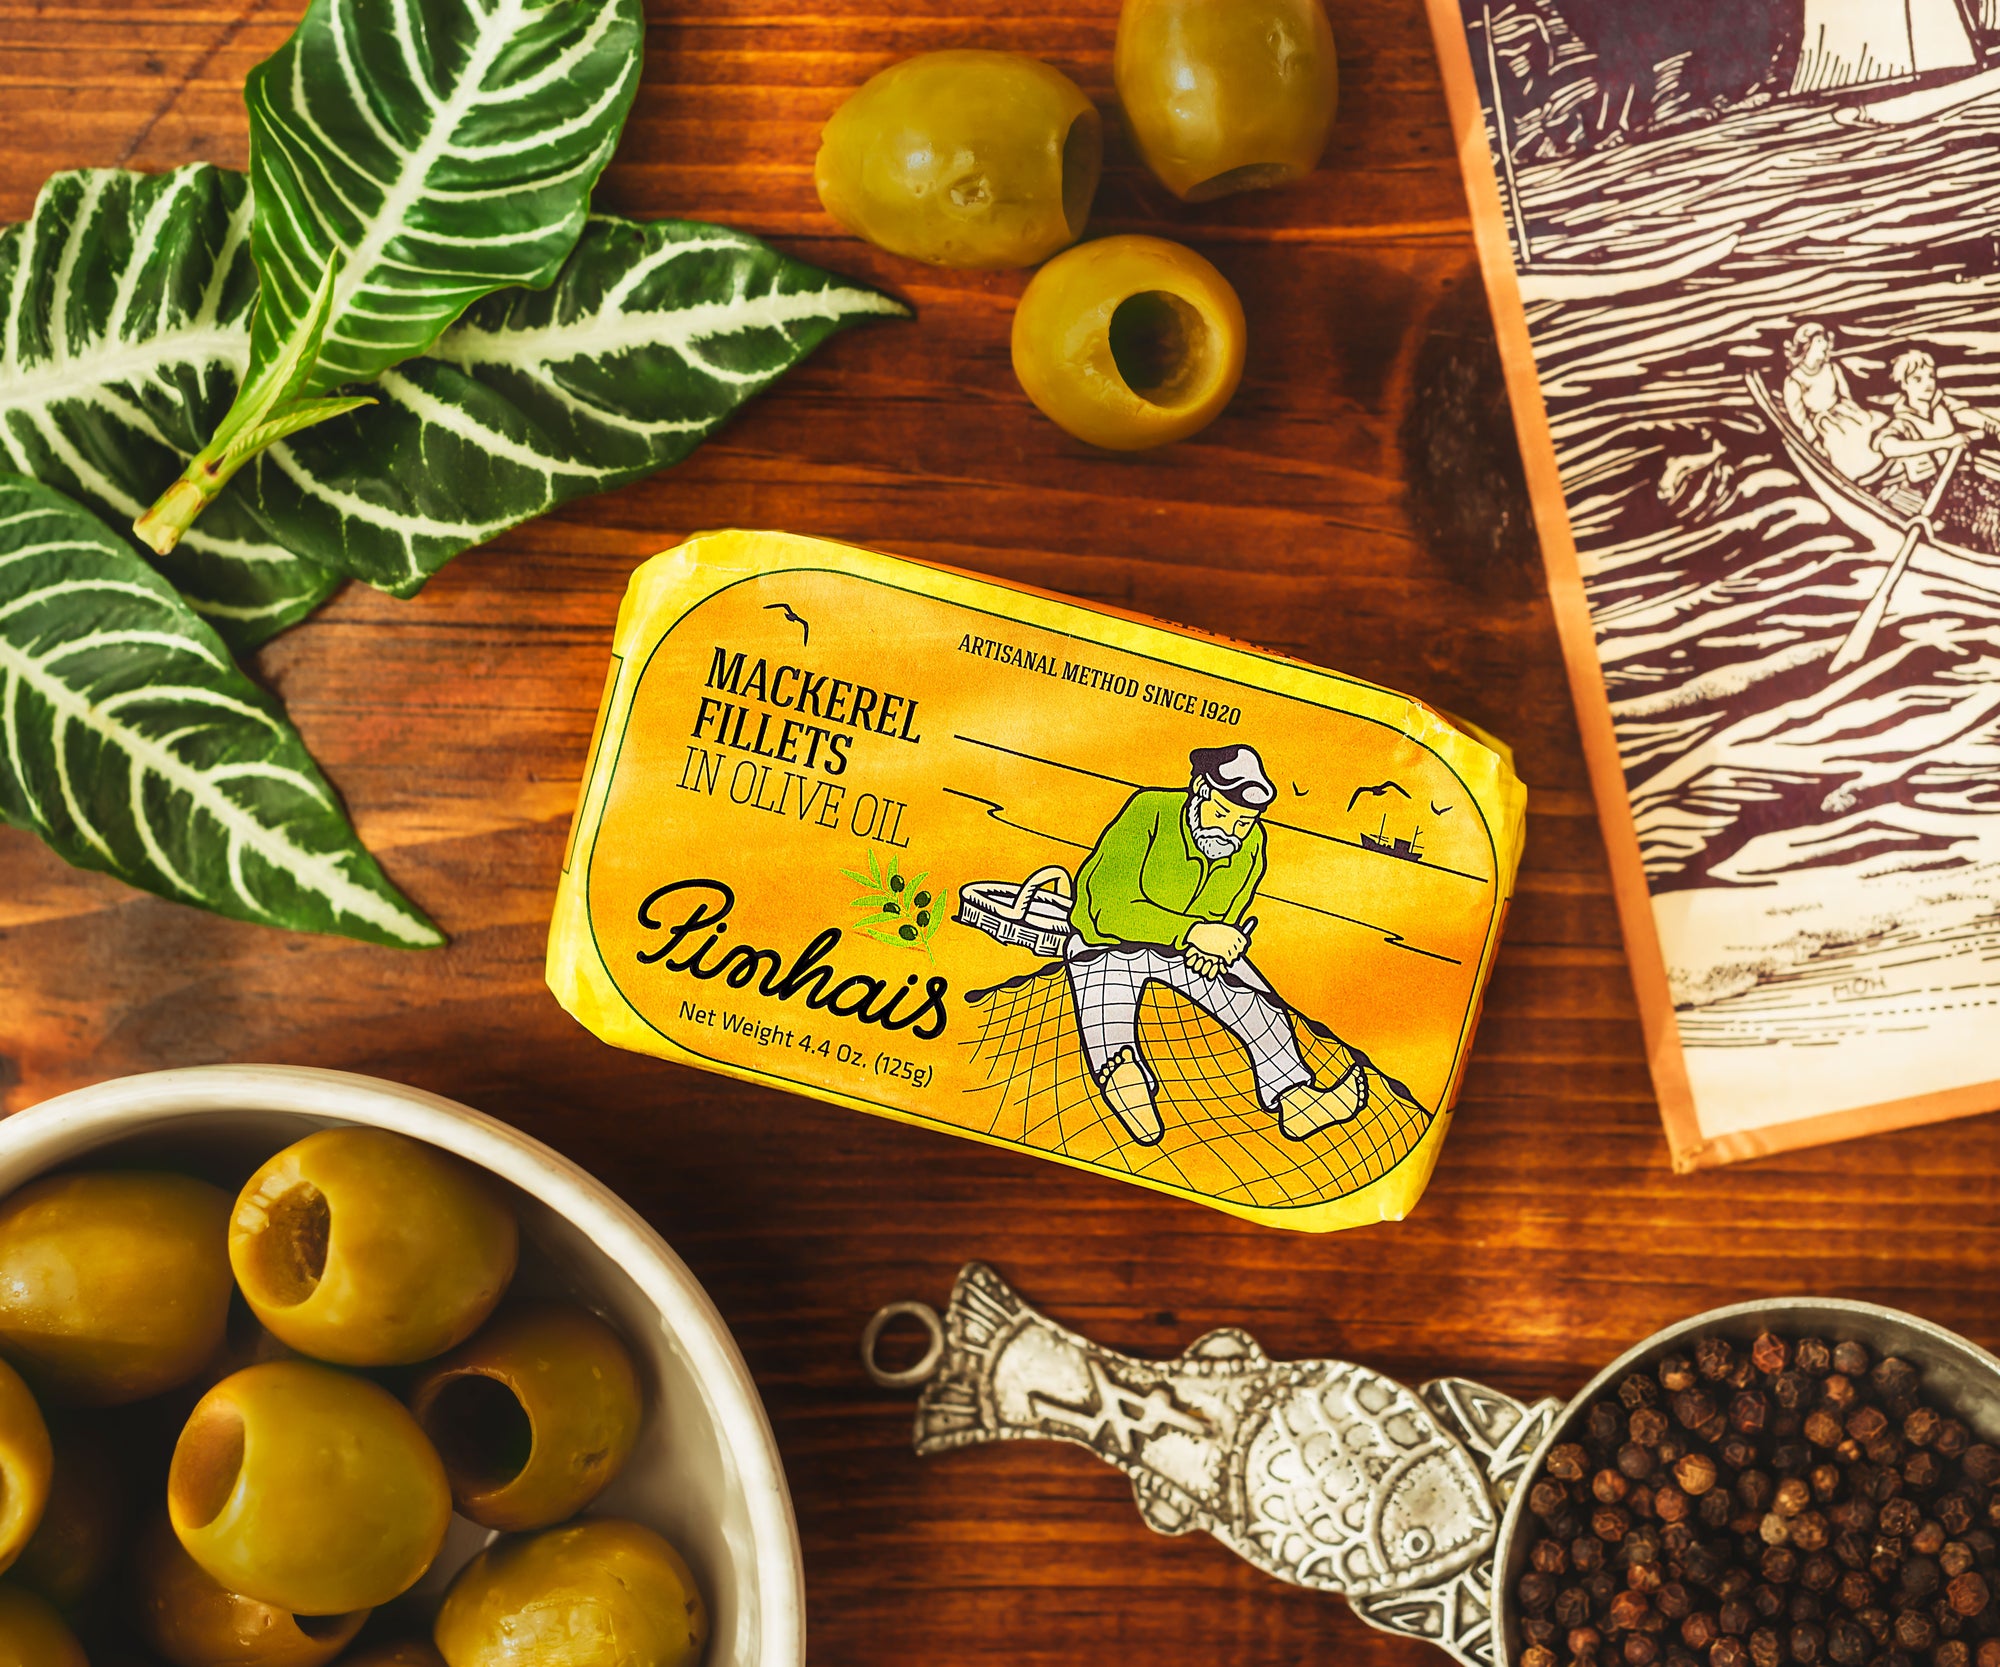 Pinhais Mackerel Fillets in Olive Oil